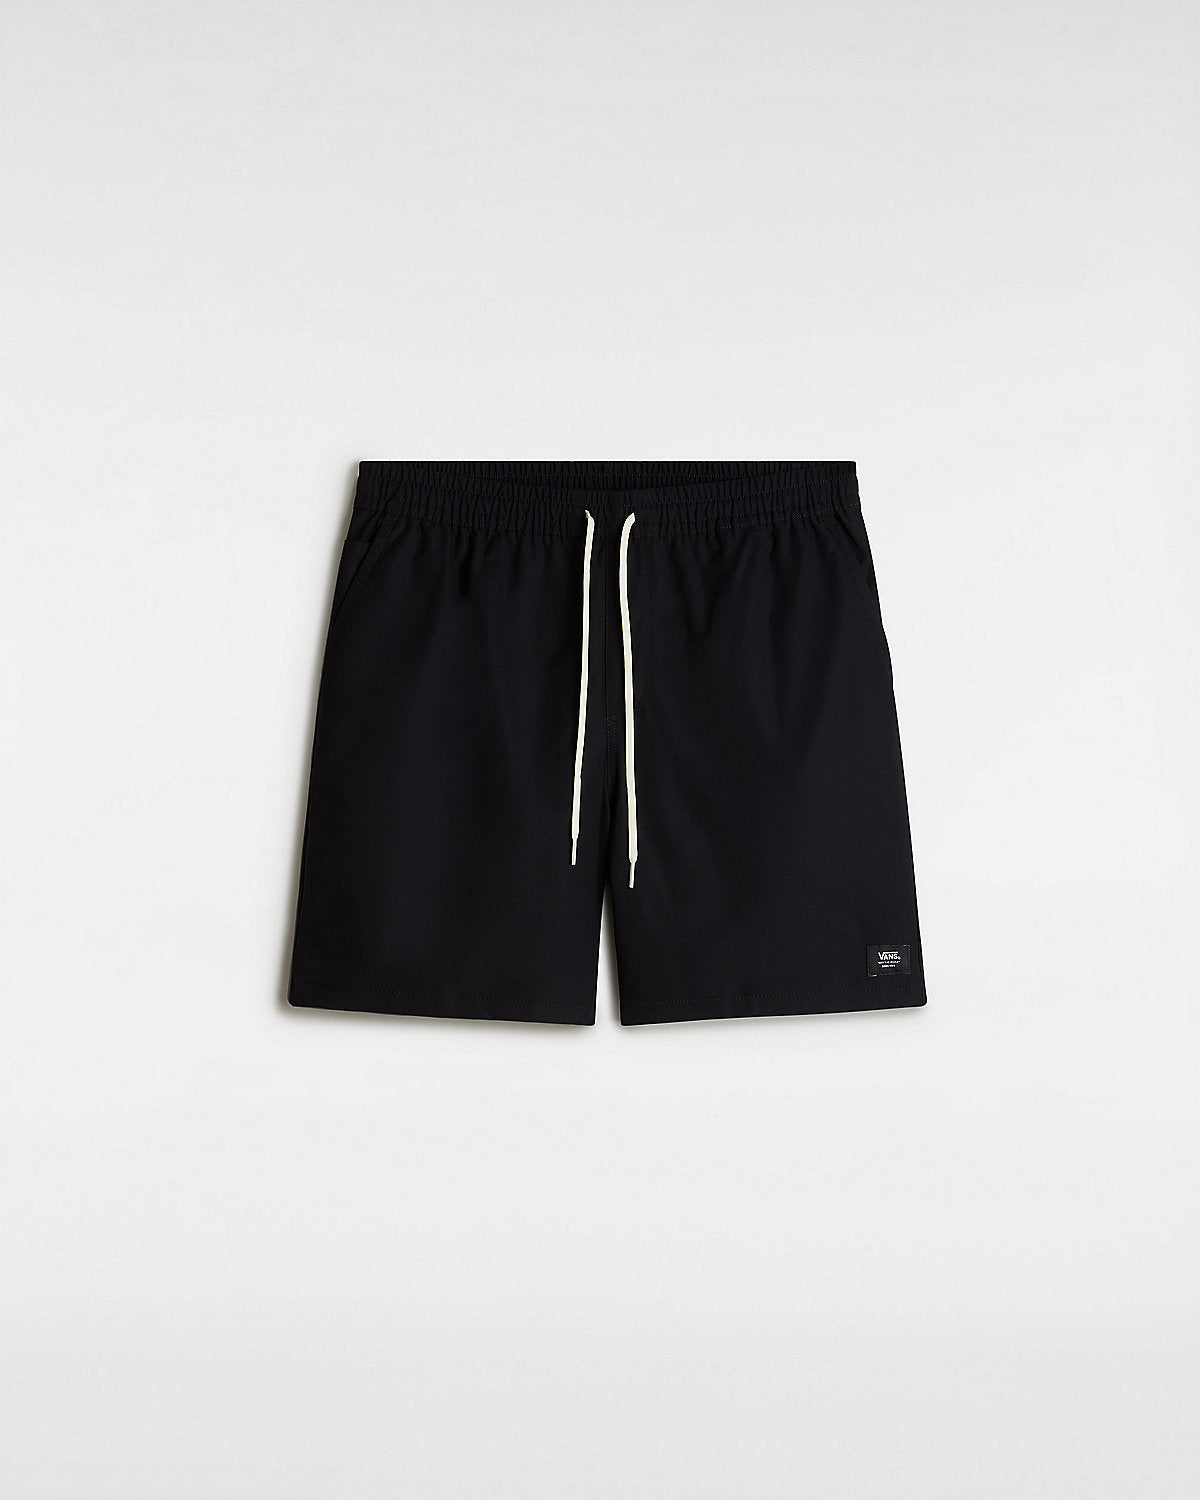 VANS Mens Range Relaxed Sports Shorts - Black